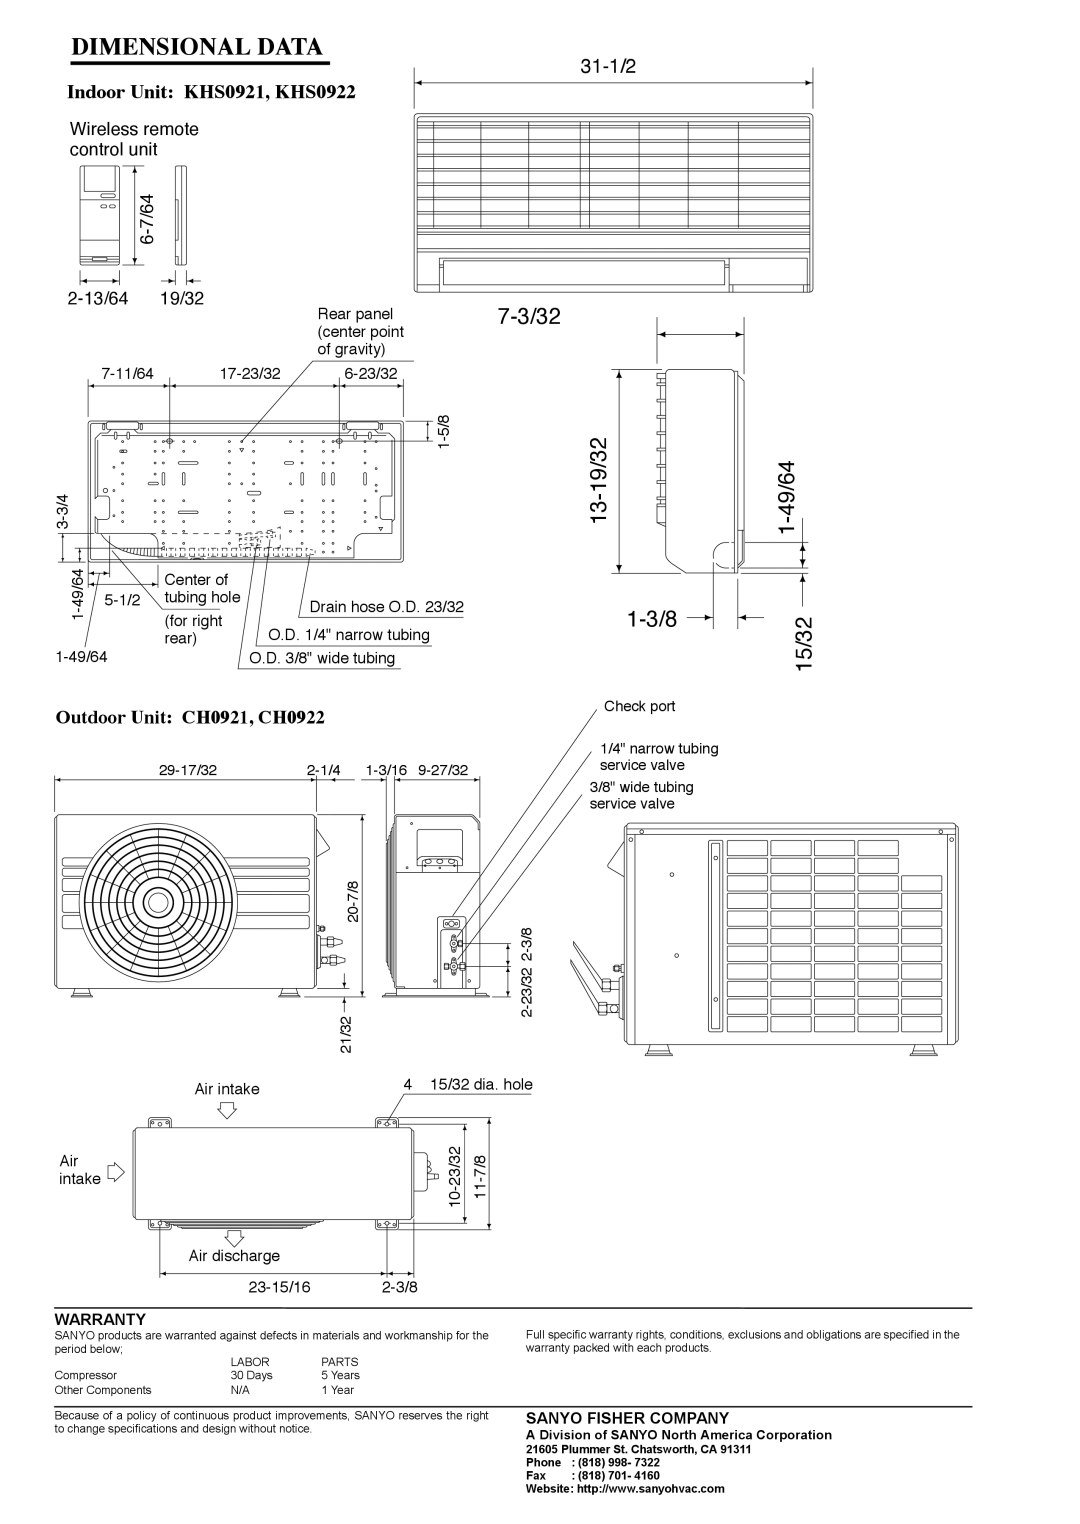 Sanyo 09KHS22 dimensions Warranty, Sanyo Fisher Company, Dimensional Data, 7-3/32, 13-19/32 1-3/8, 1-49/64 15/32, 31-1/2 